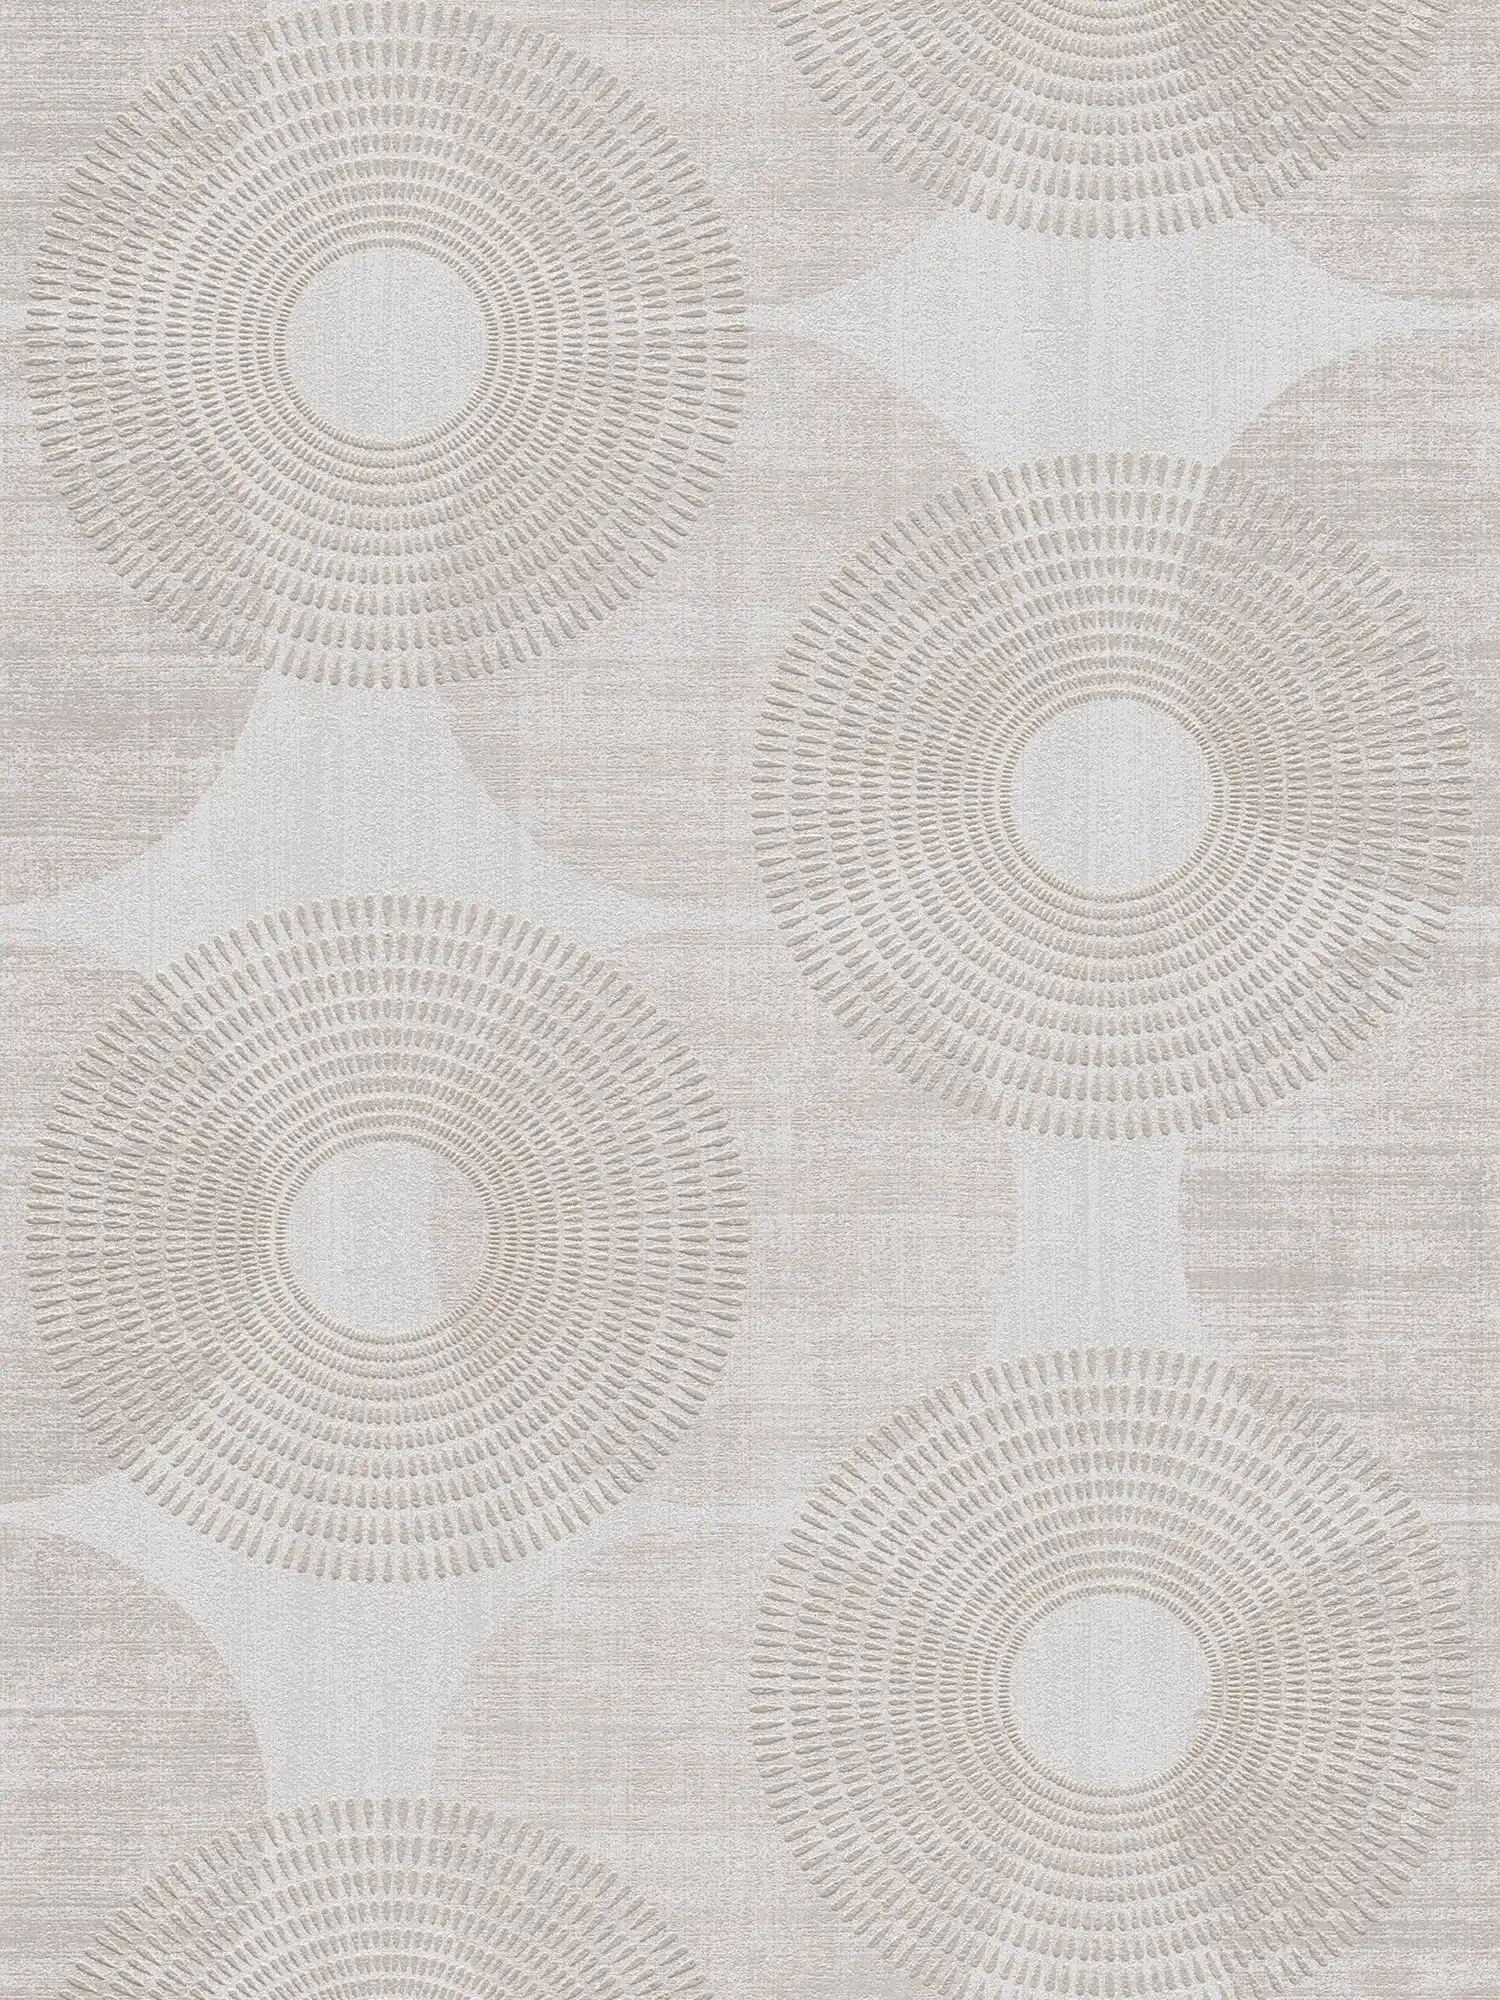 Effect wallpaper with geometric design in Scandi style - beige
